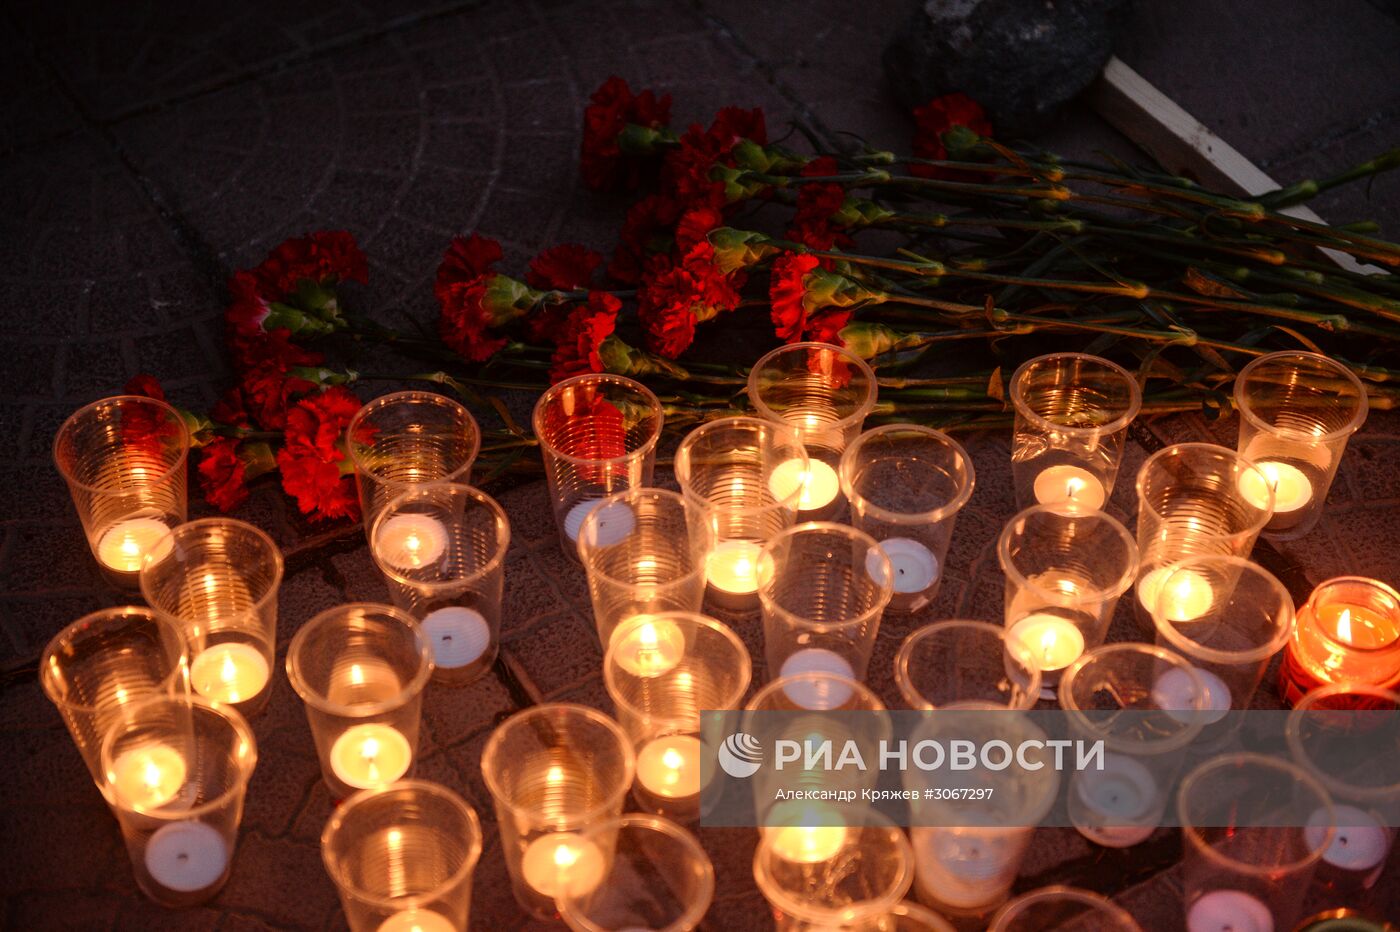 Акция "Вечер памяти" в Новосибирске